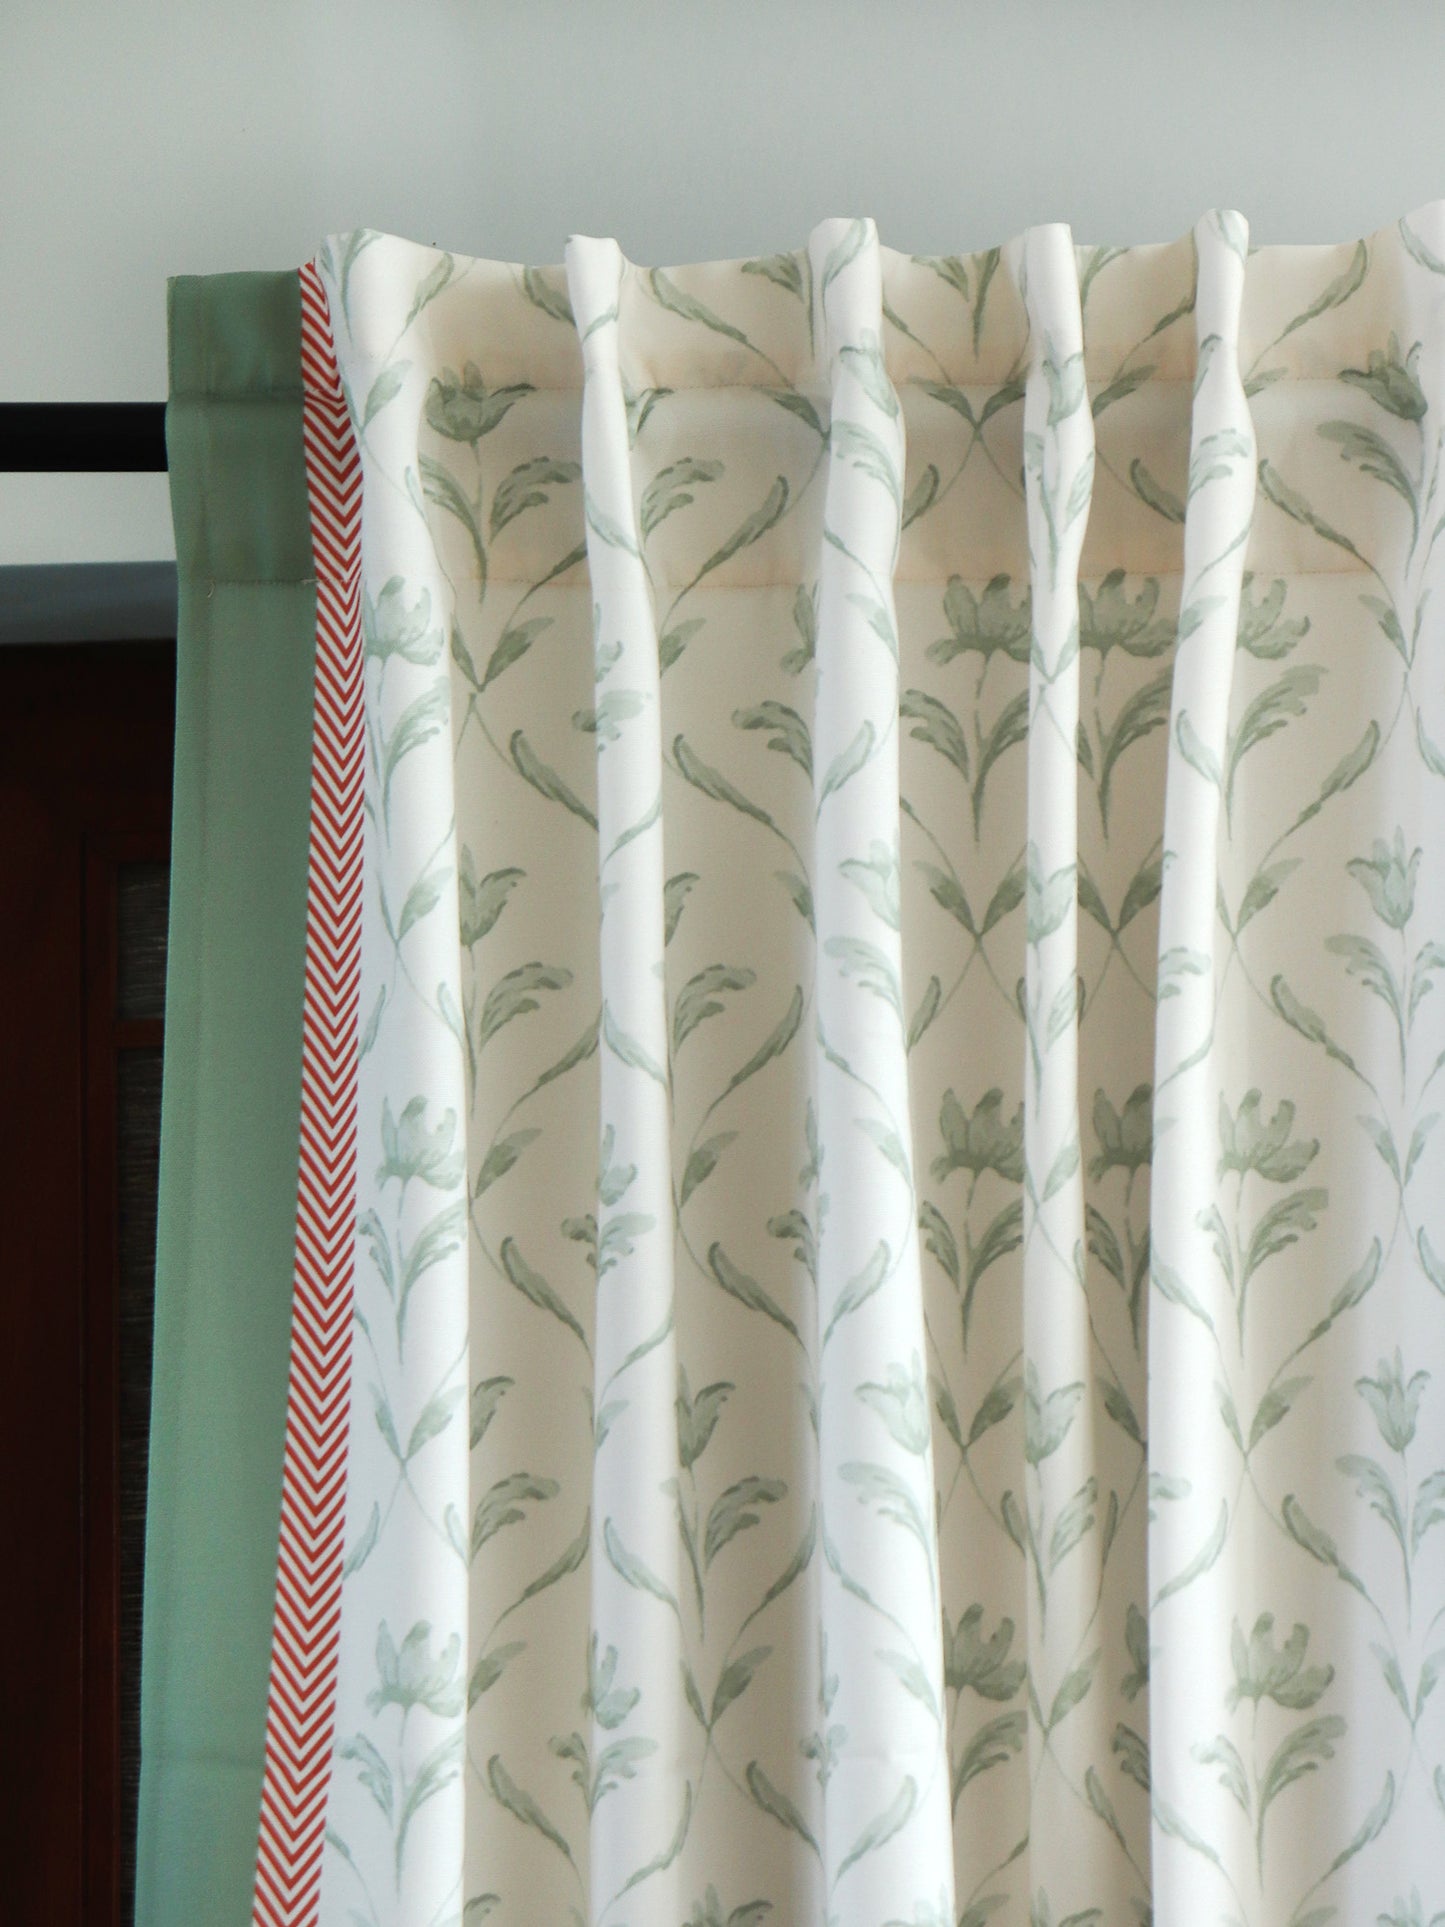 Door Curtain Cotton Blend Floral Digital Printed in White Green - 50"x84" (Hidden Loop)